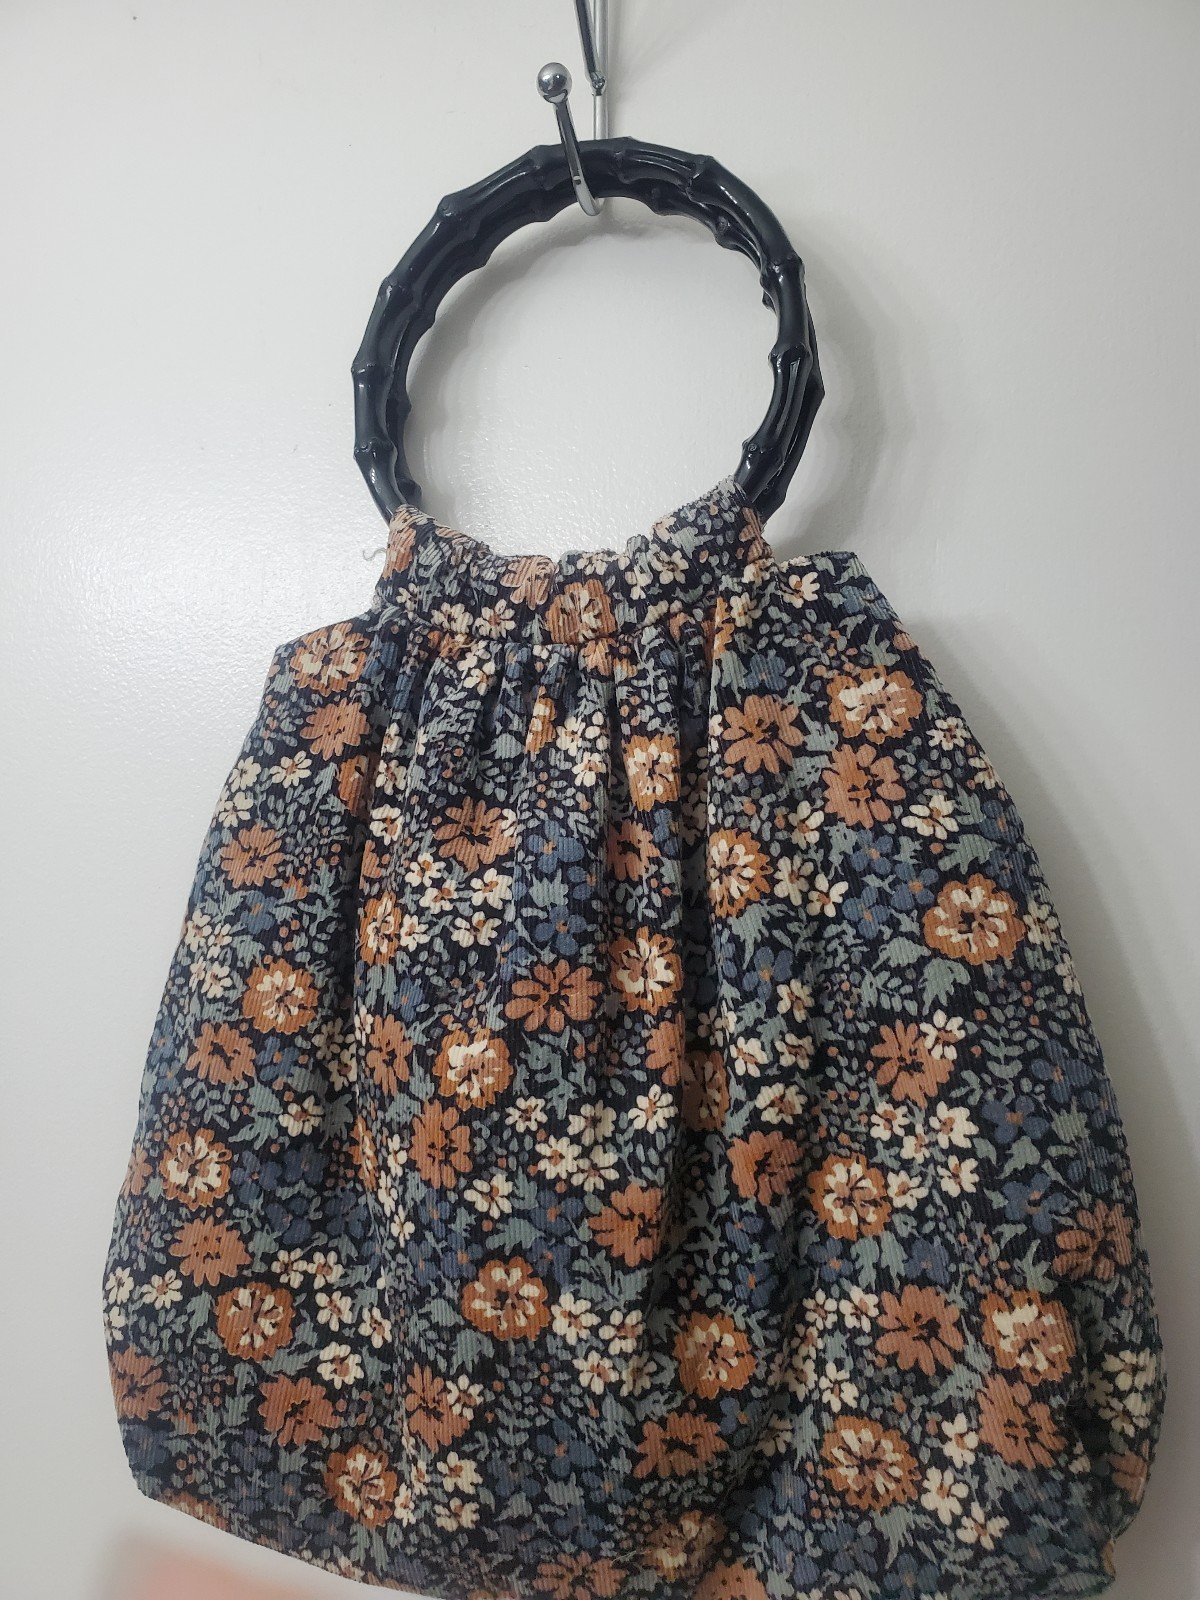 Retro Vintage Handbag Sewing Knitting Bag Hard Plastic 